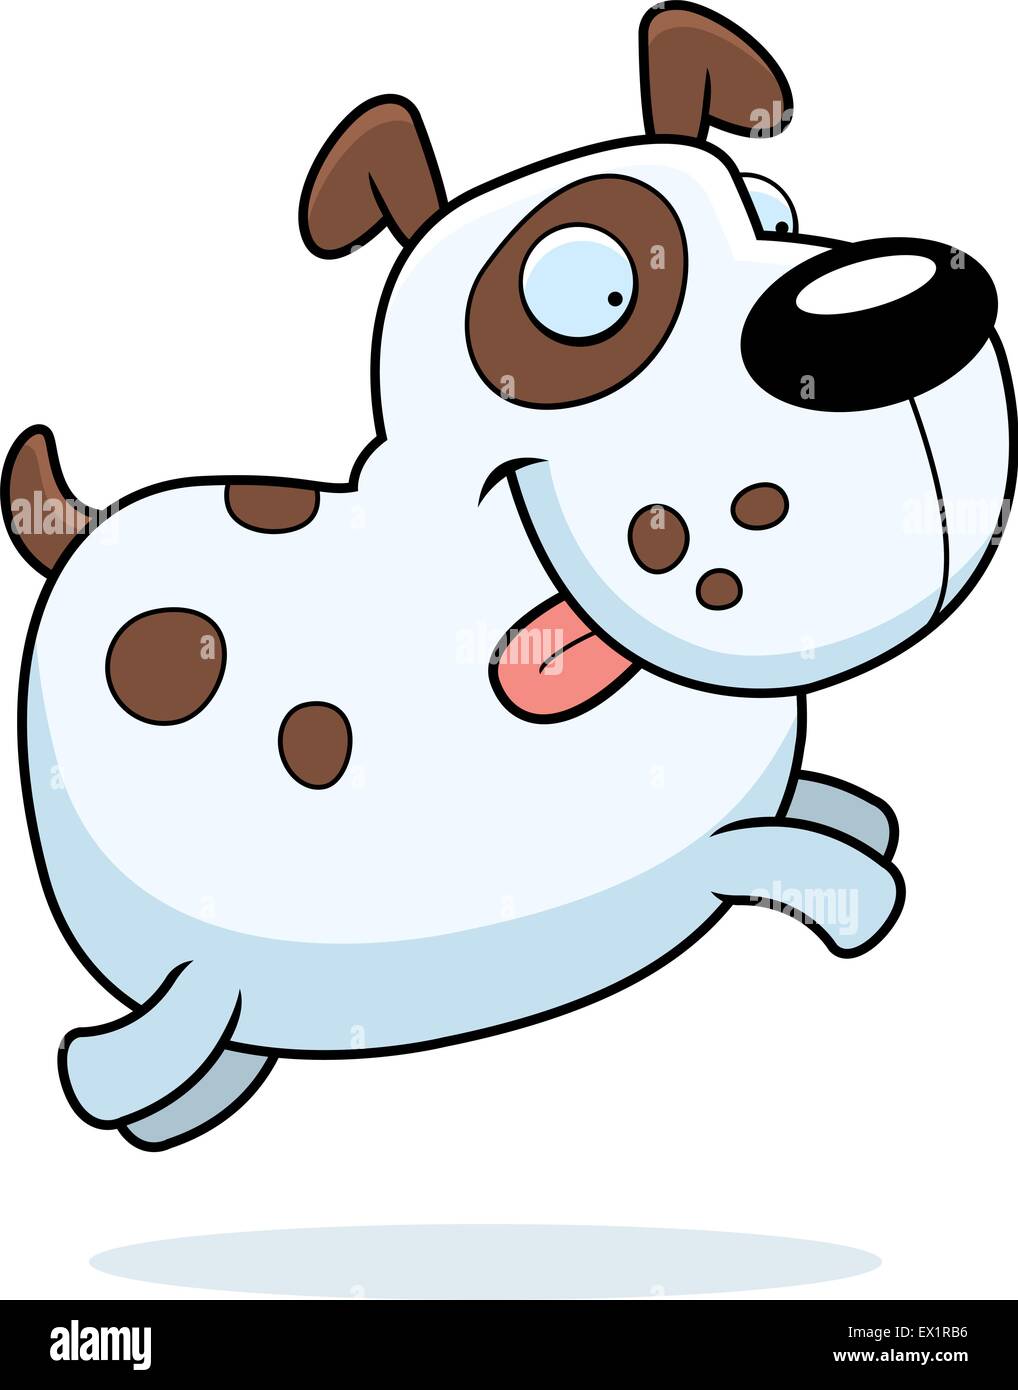 Cartoon dog hi-res stock photography and images - Alamy